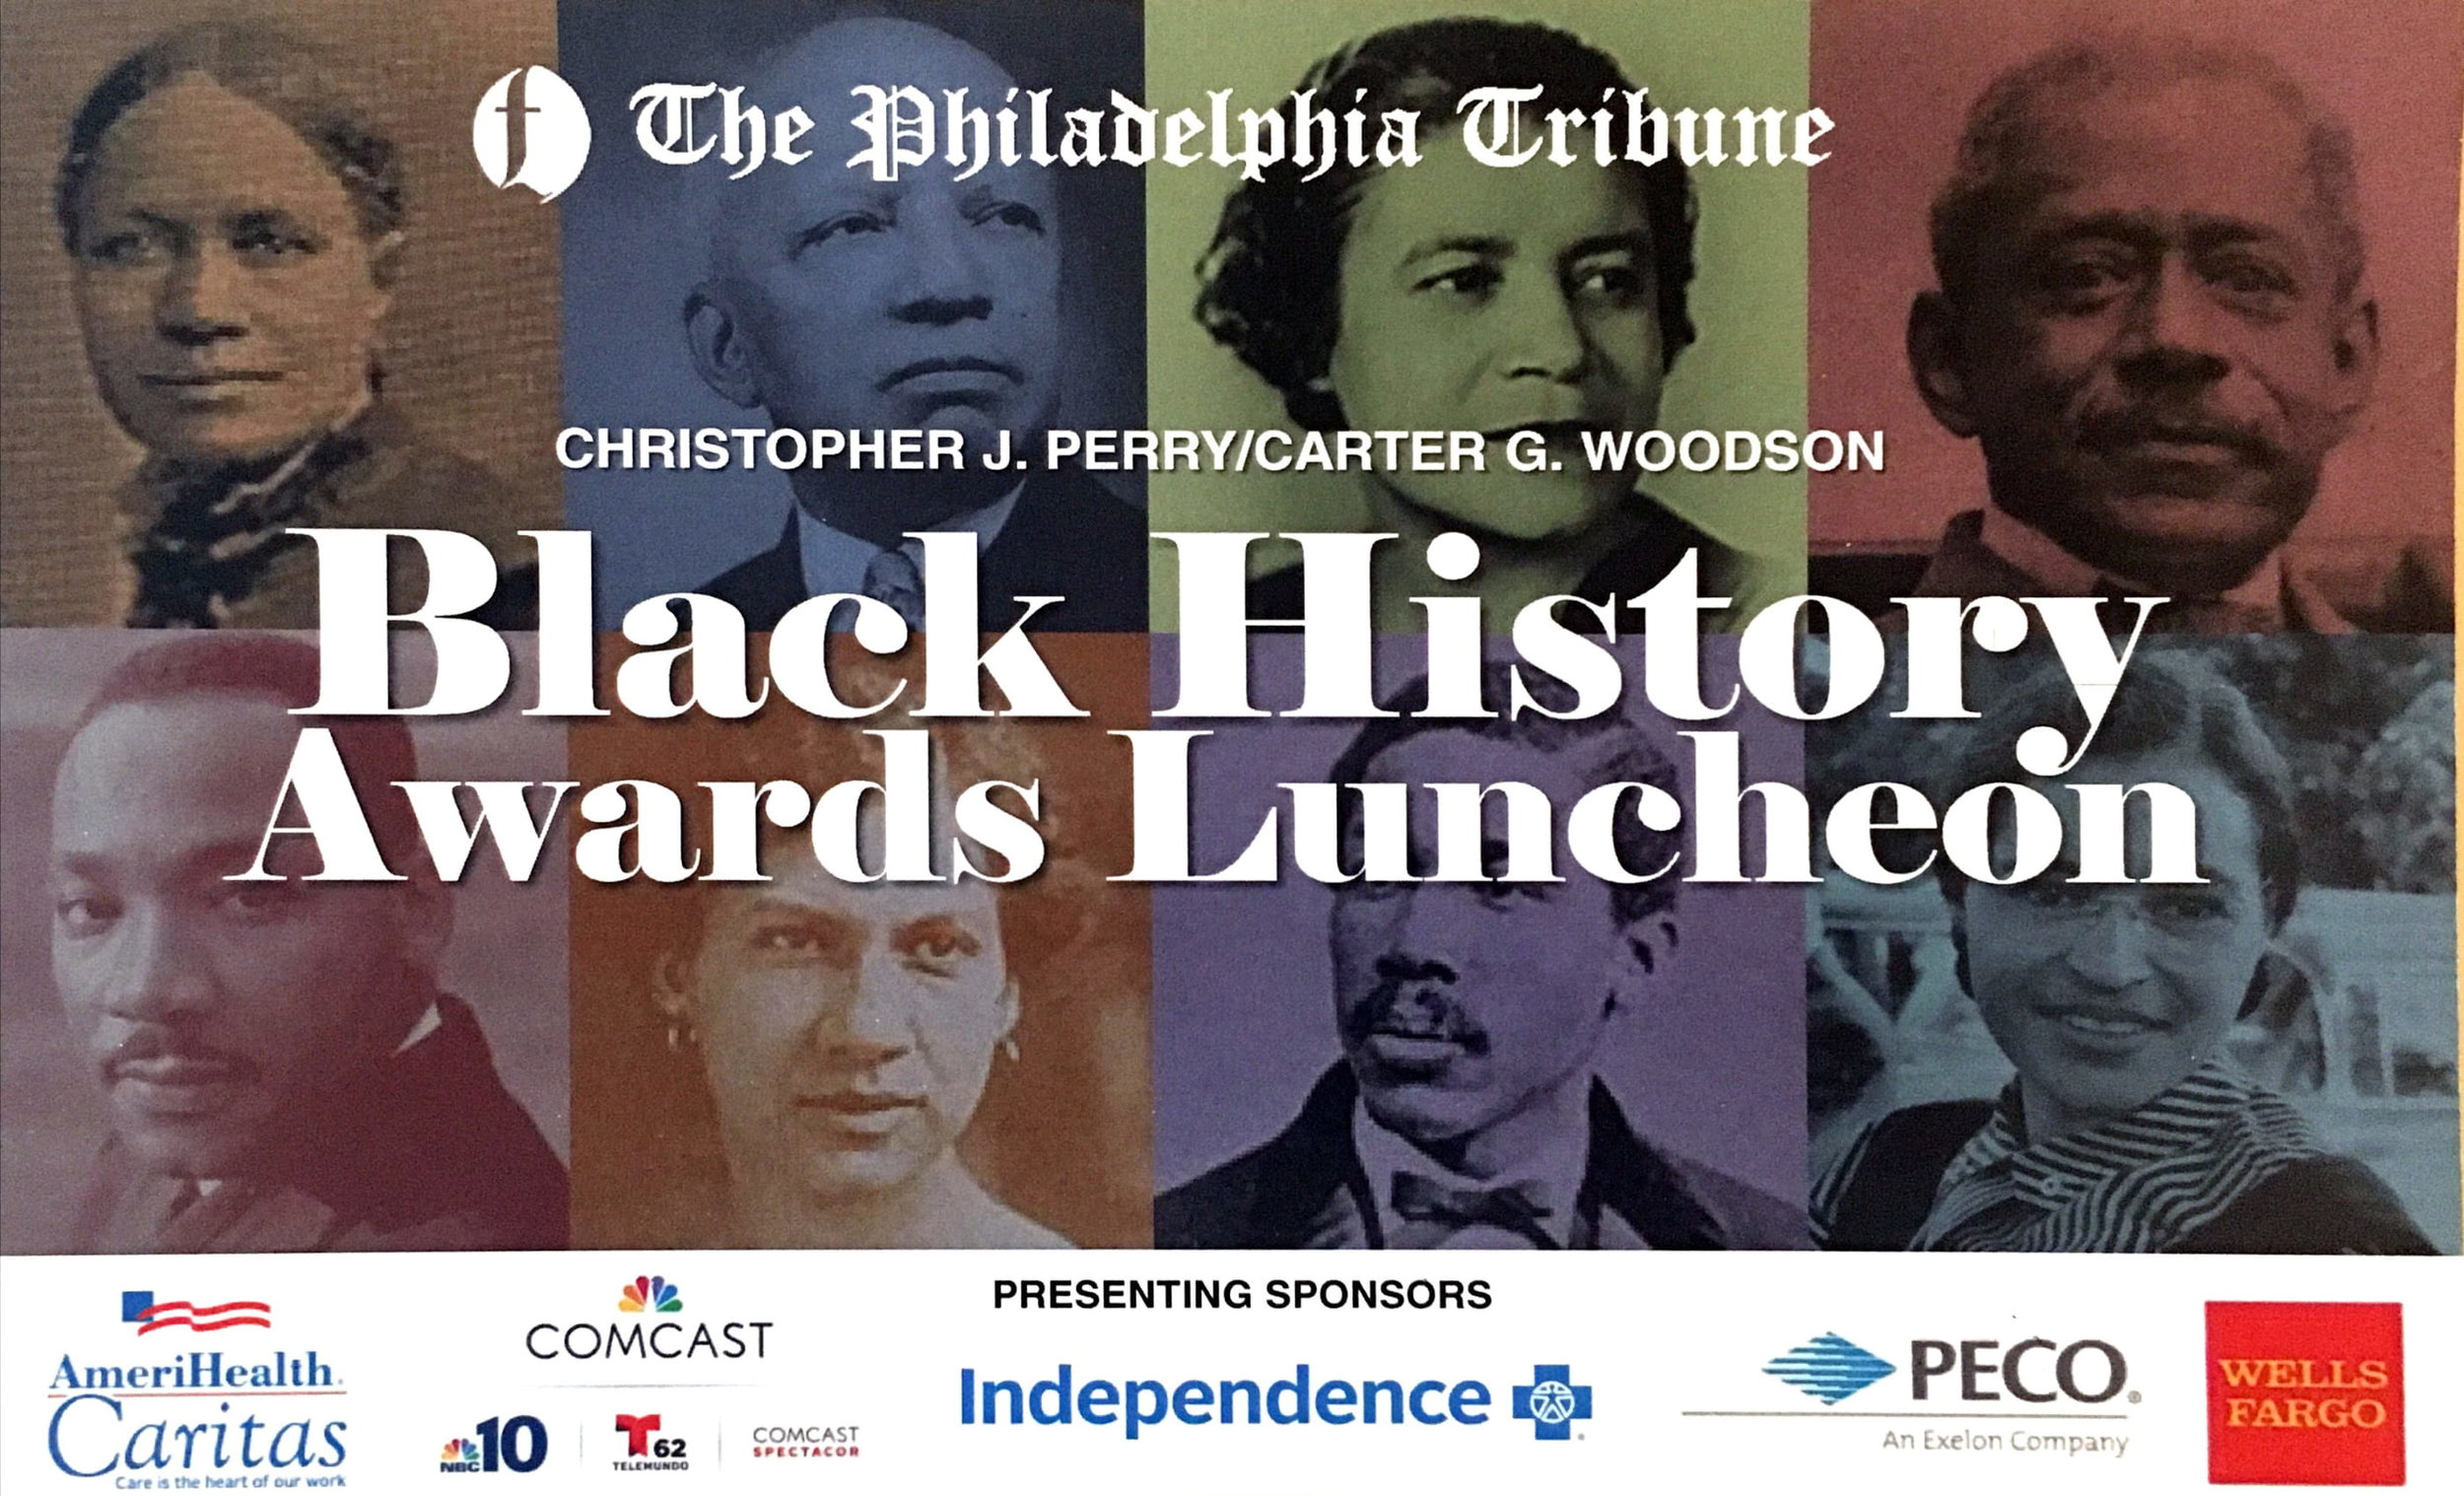 Black History Awards Luncheon